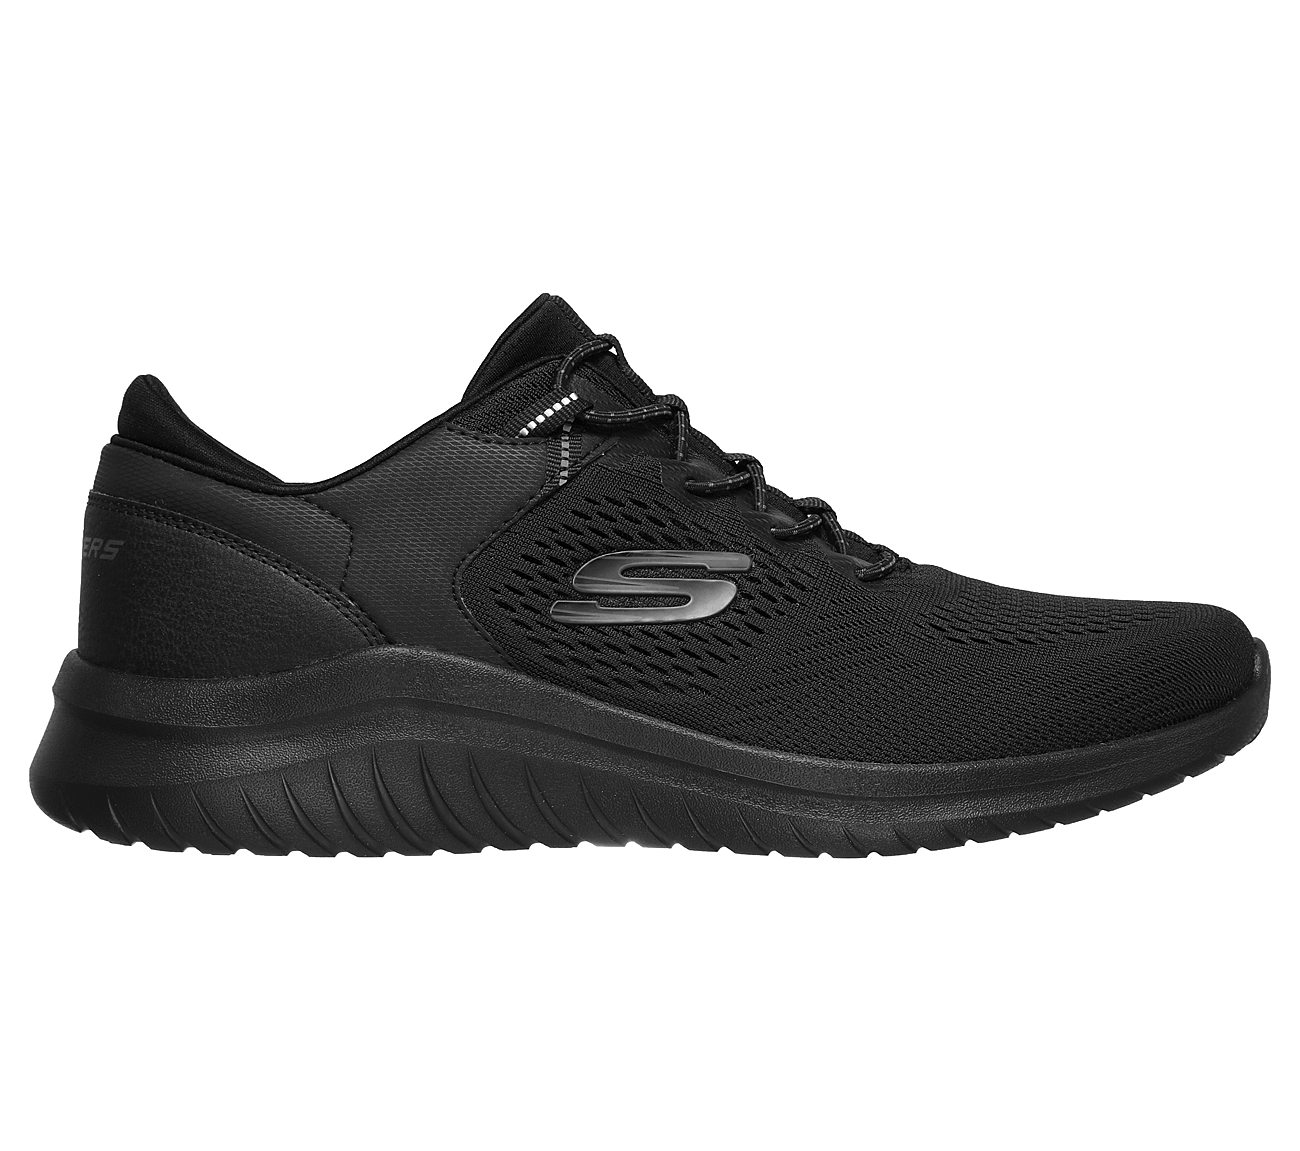  Skechers - Mens Ultra Flex 2.0 Running Walking Shoes Sneakers  - Kerlem Shoes (Grey, 12)